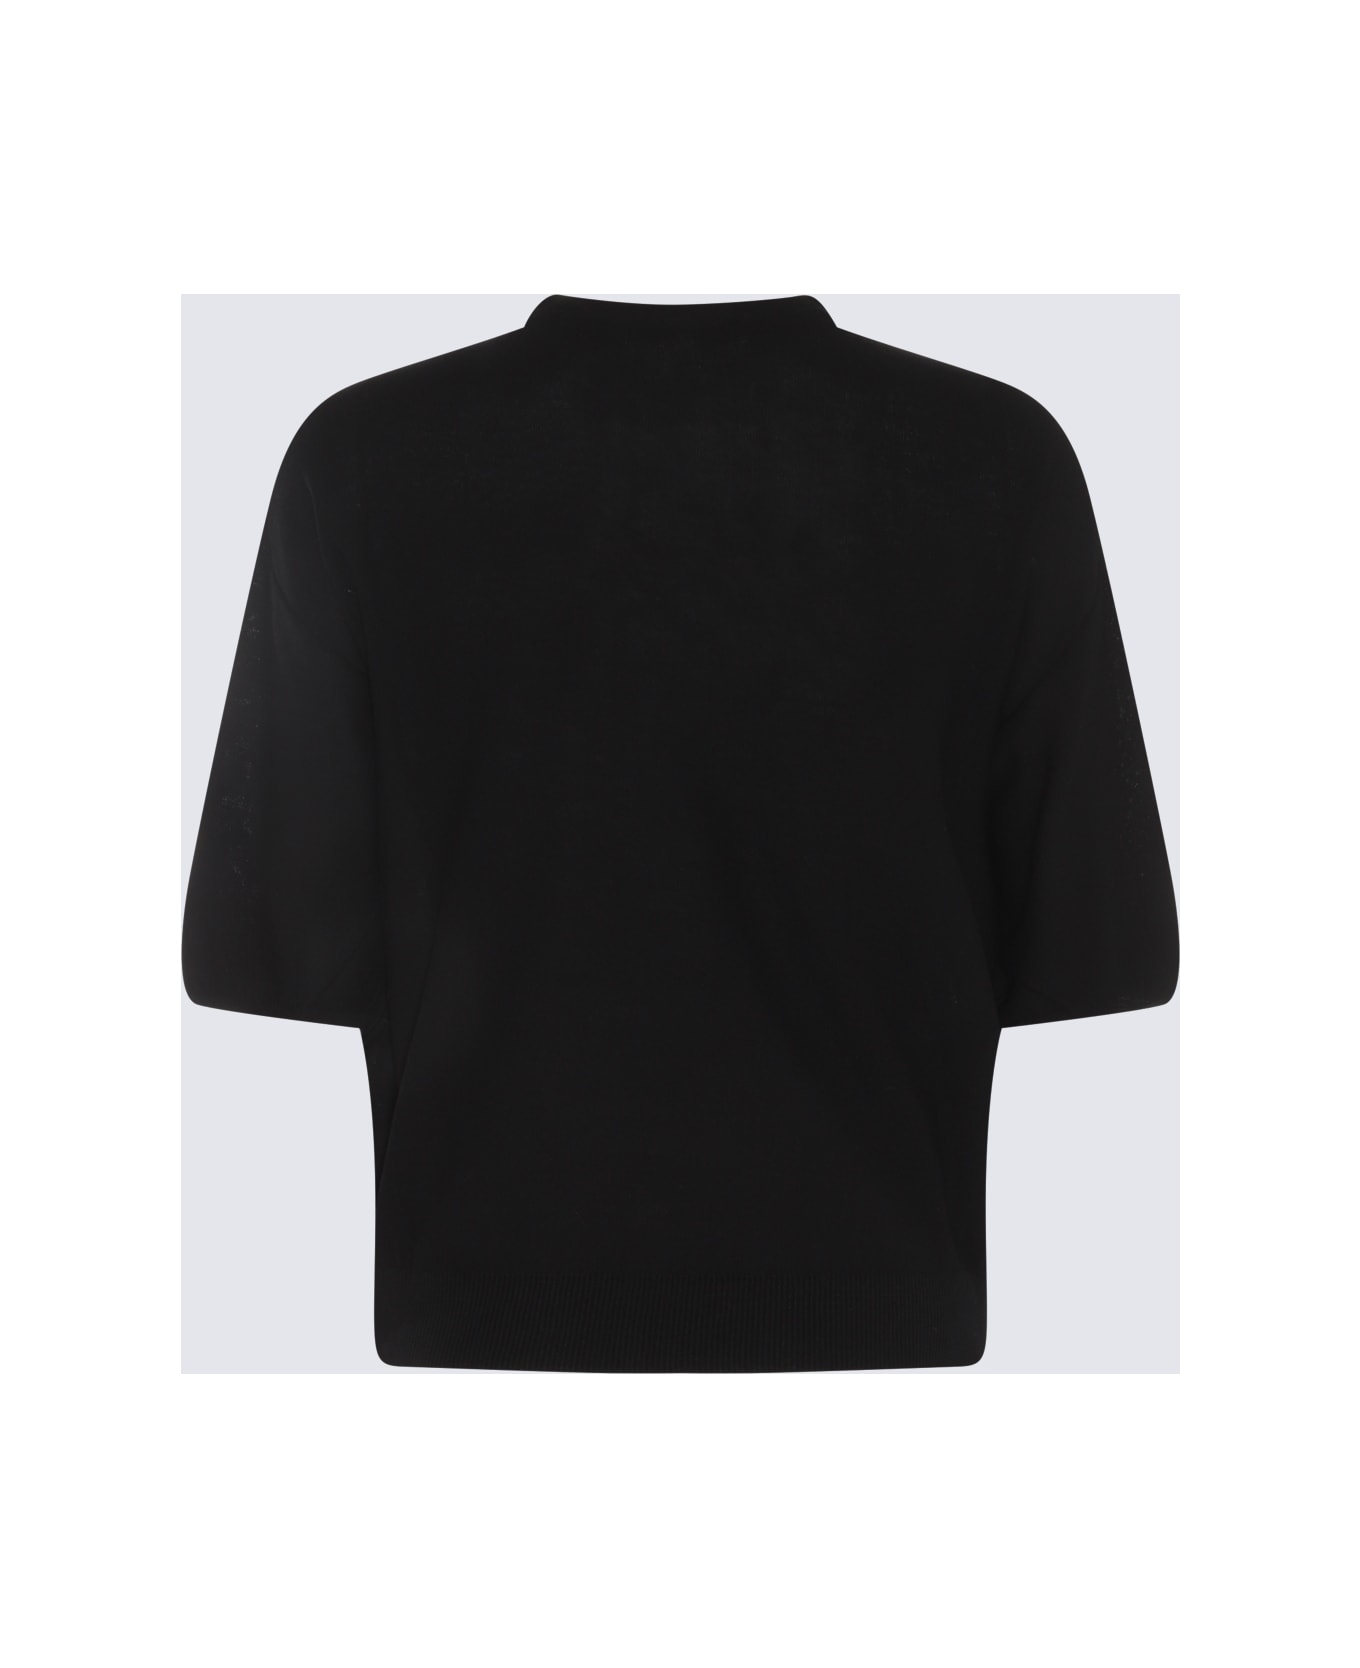 Antonelli Black Cotton Knitwear - Black Tシャツ